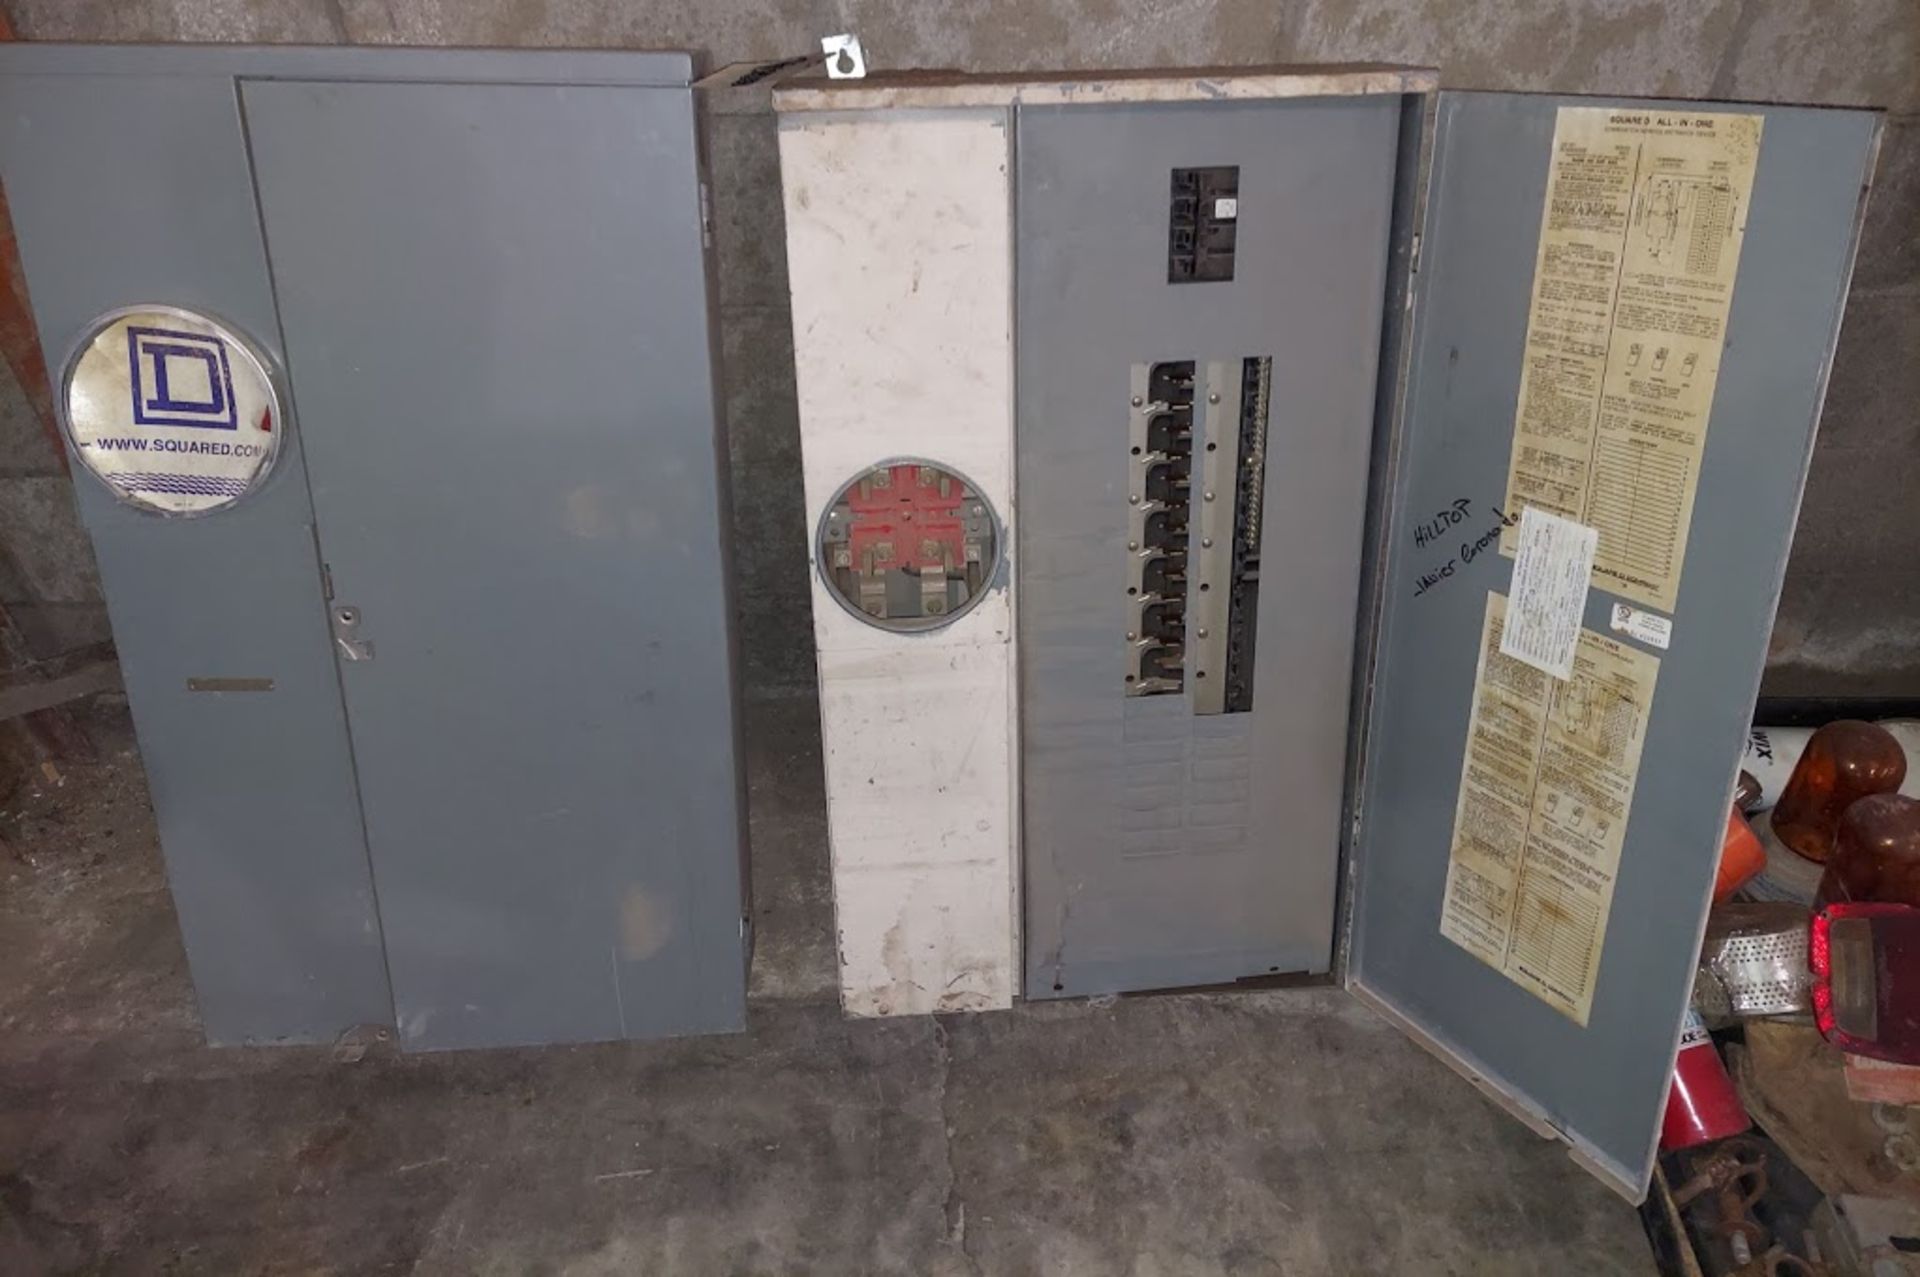 2 -Square D Electrical Service Panels